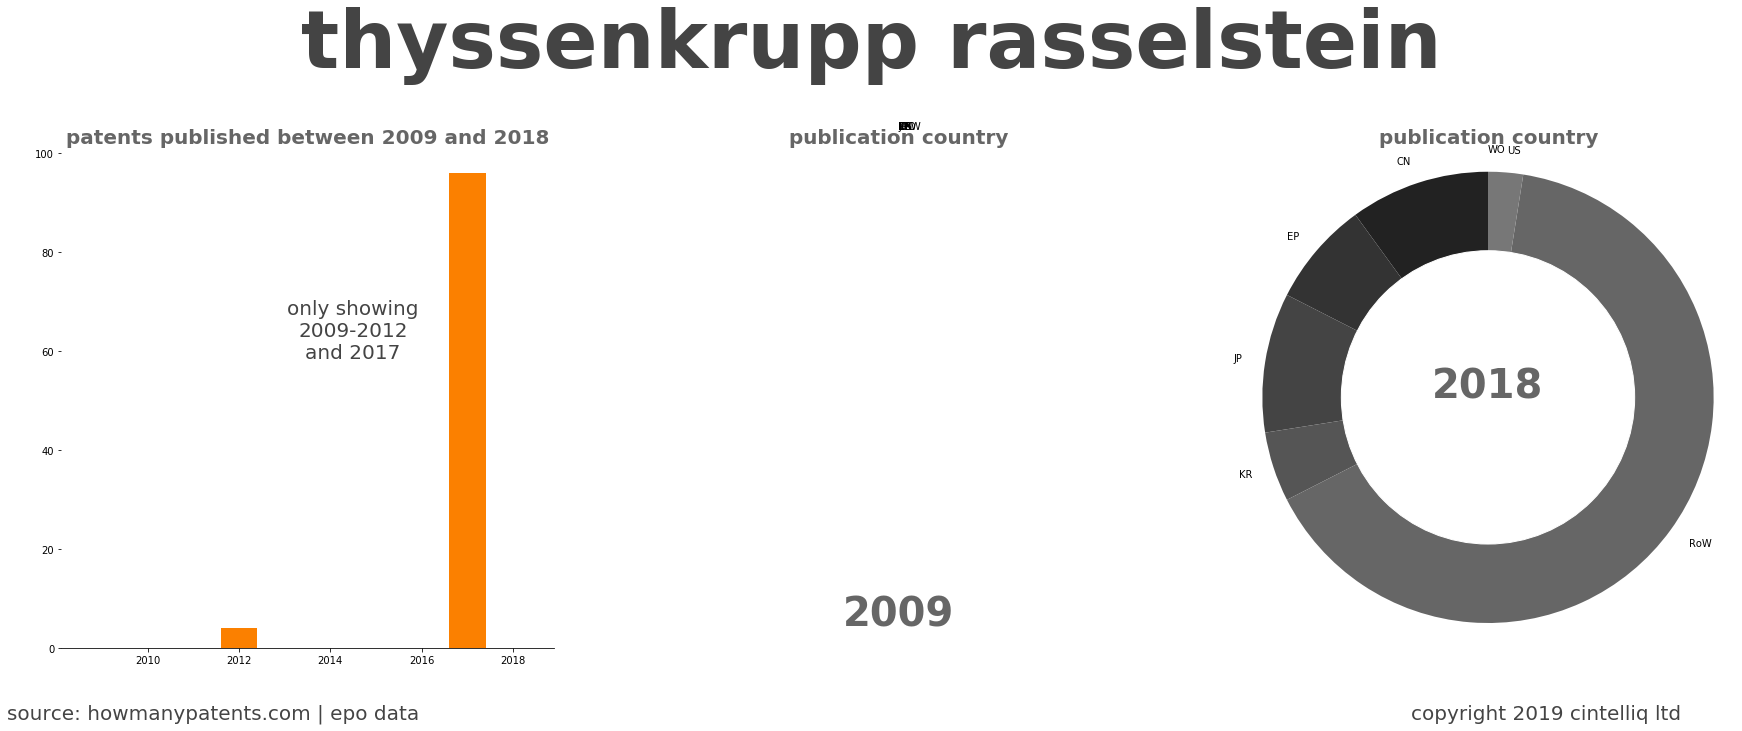 summary of patents for Thyssenkrupp Rasselstein